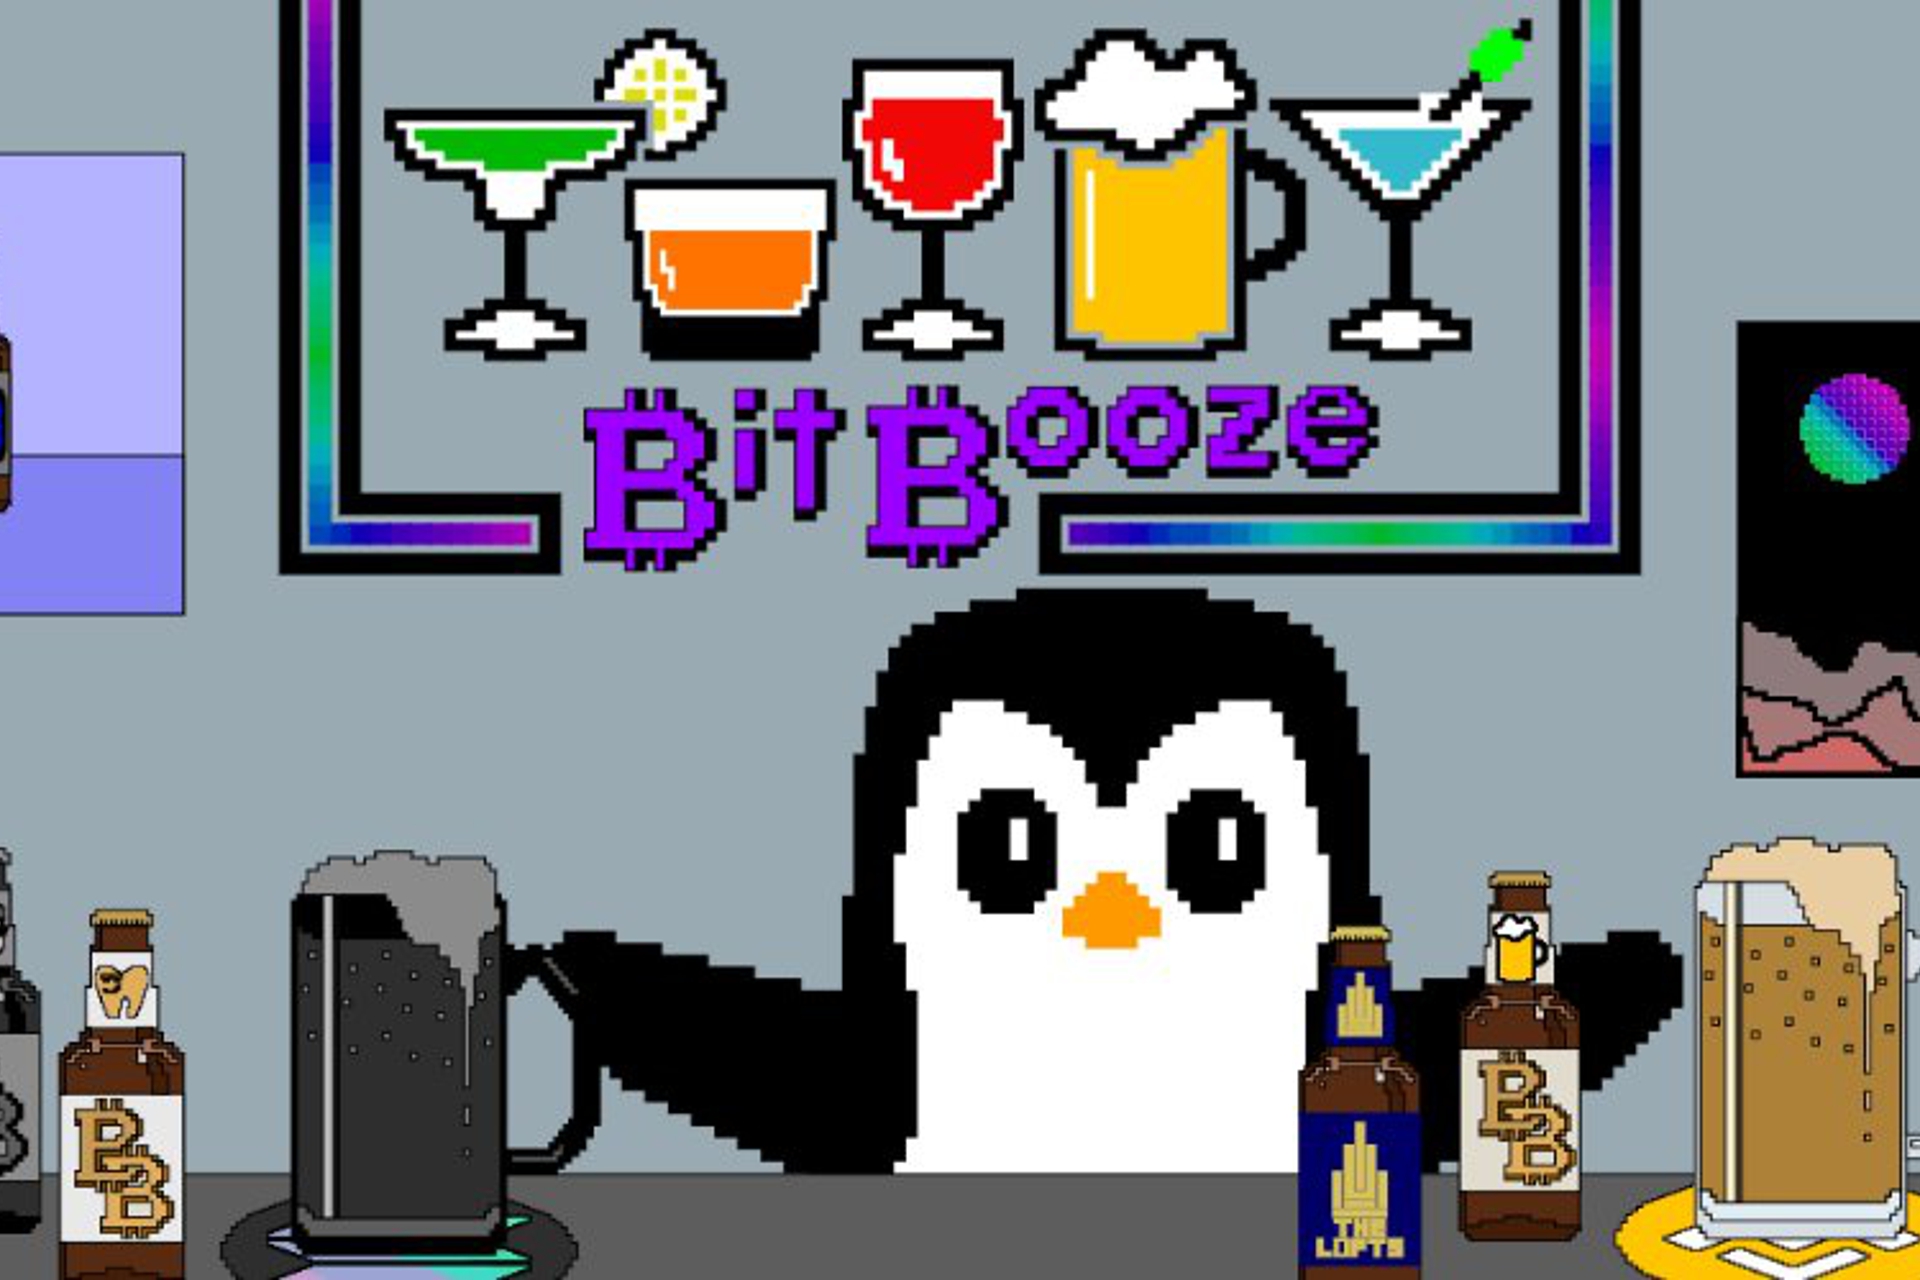 Bit-Booze